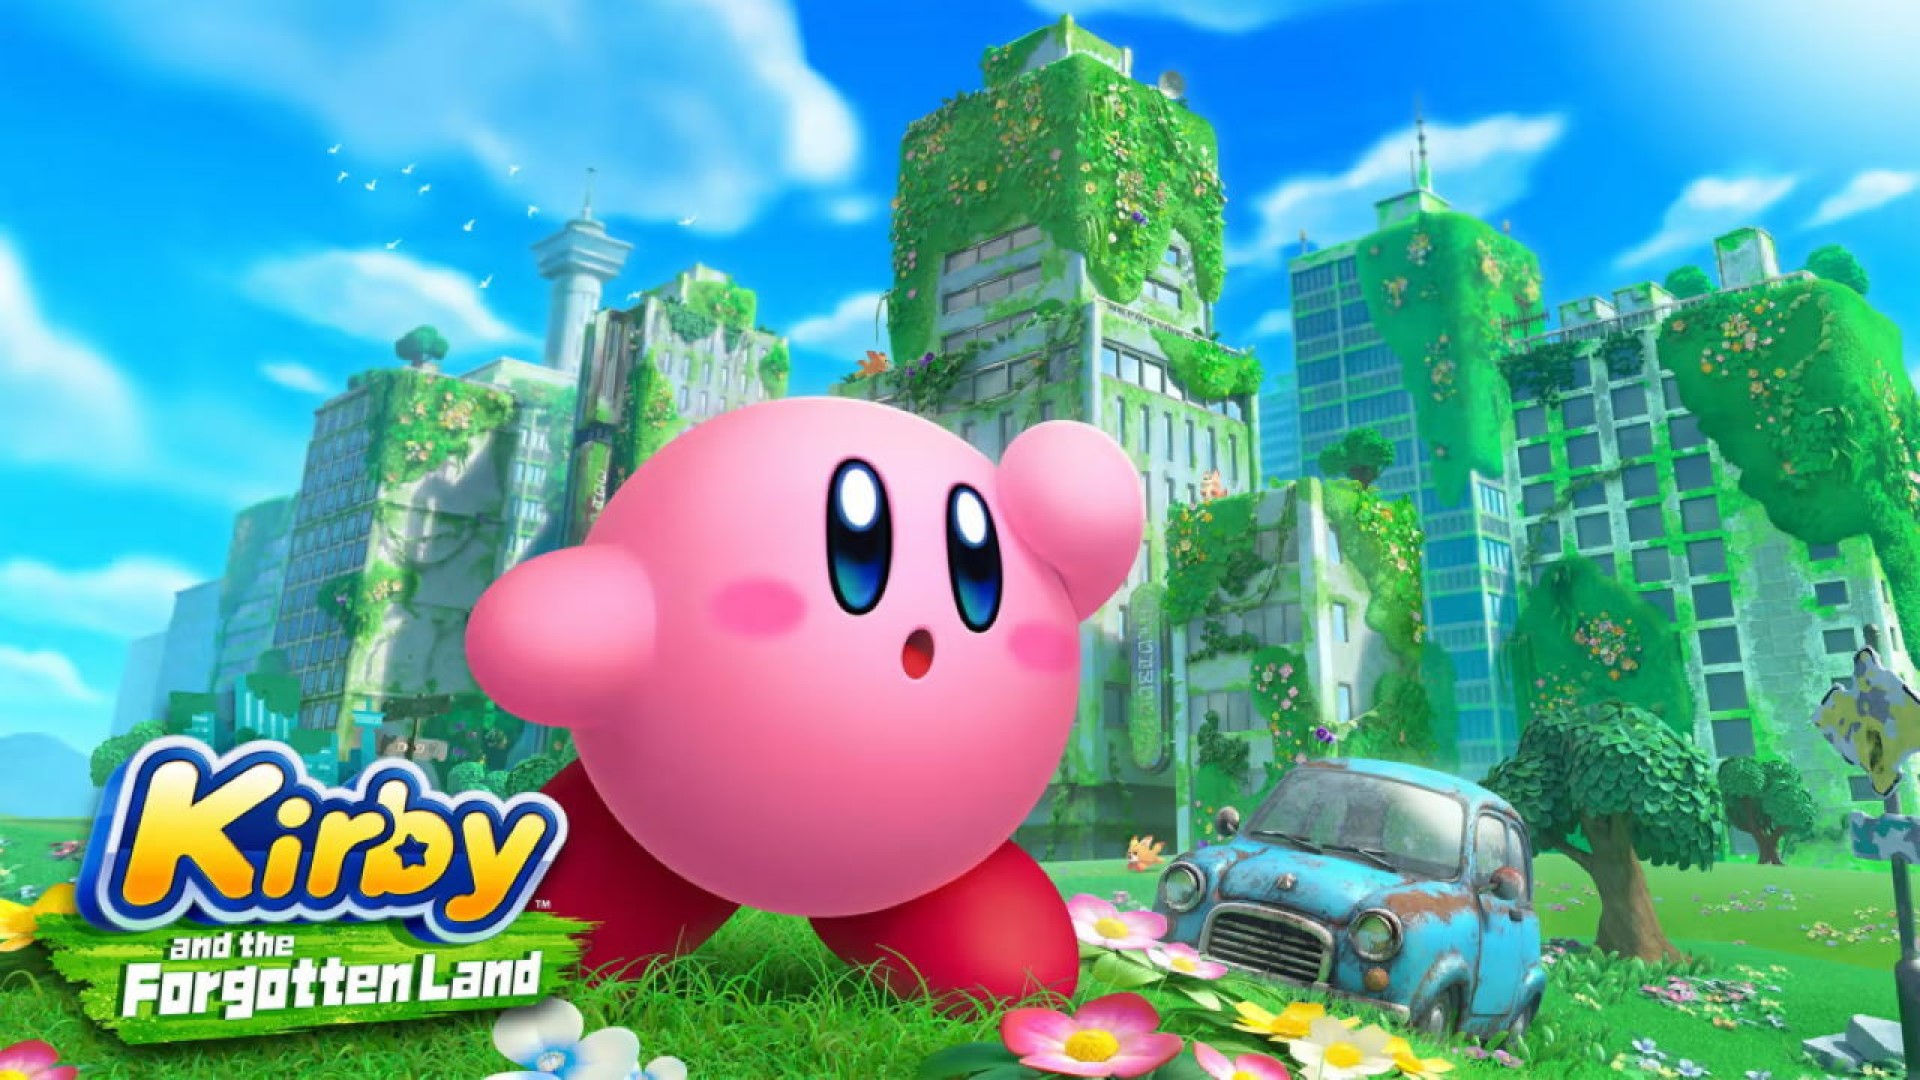 Kirby and the Forgotten Land ยังคงความสดใสและสวยงามในเกมเพลย์ใหม่ พร้อมวางจำหน่ายมีนาคมนี้